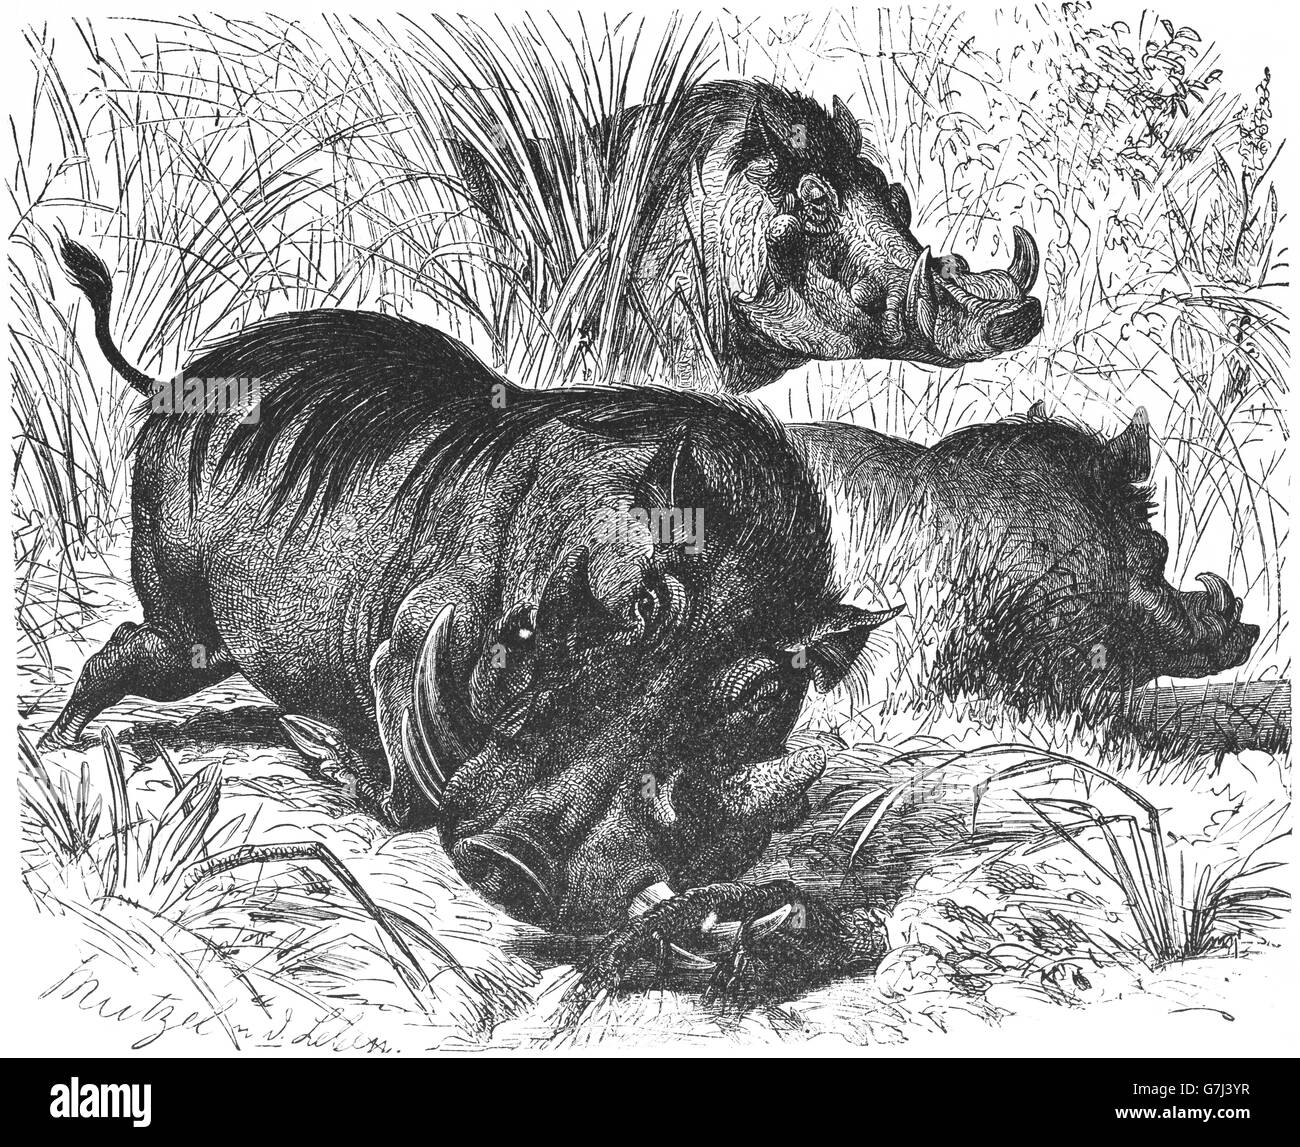 Common warthog, Phacochoerus africanus, wild pig, Suidae, illustration from book dated 1904 Stock Photo